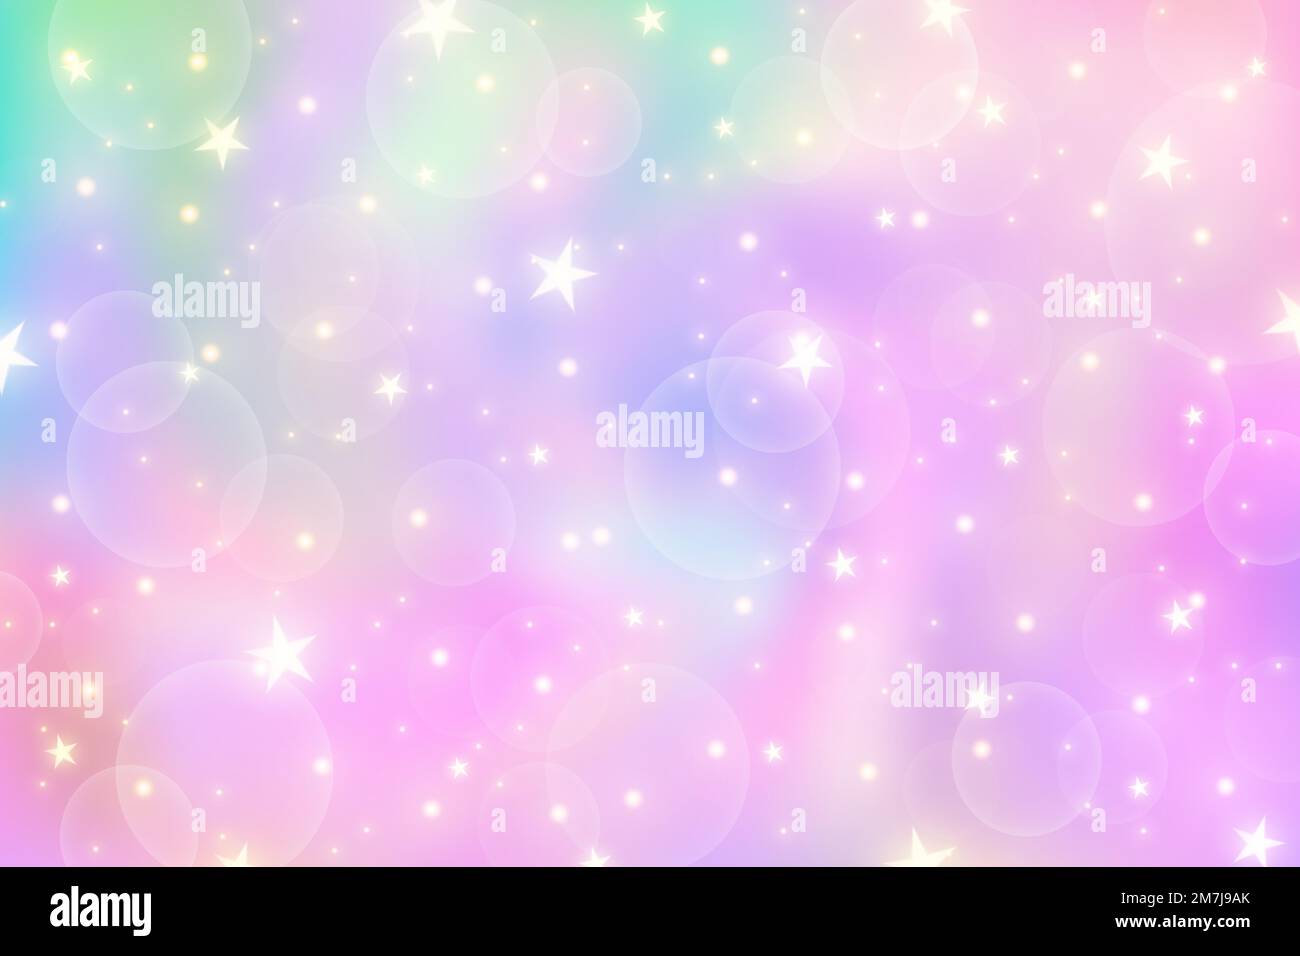 Pastel Galaxy  Galaxy wallpaper iphone Pastel galaxy Galaxy wallpaper